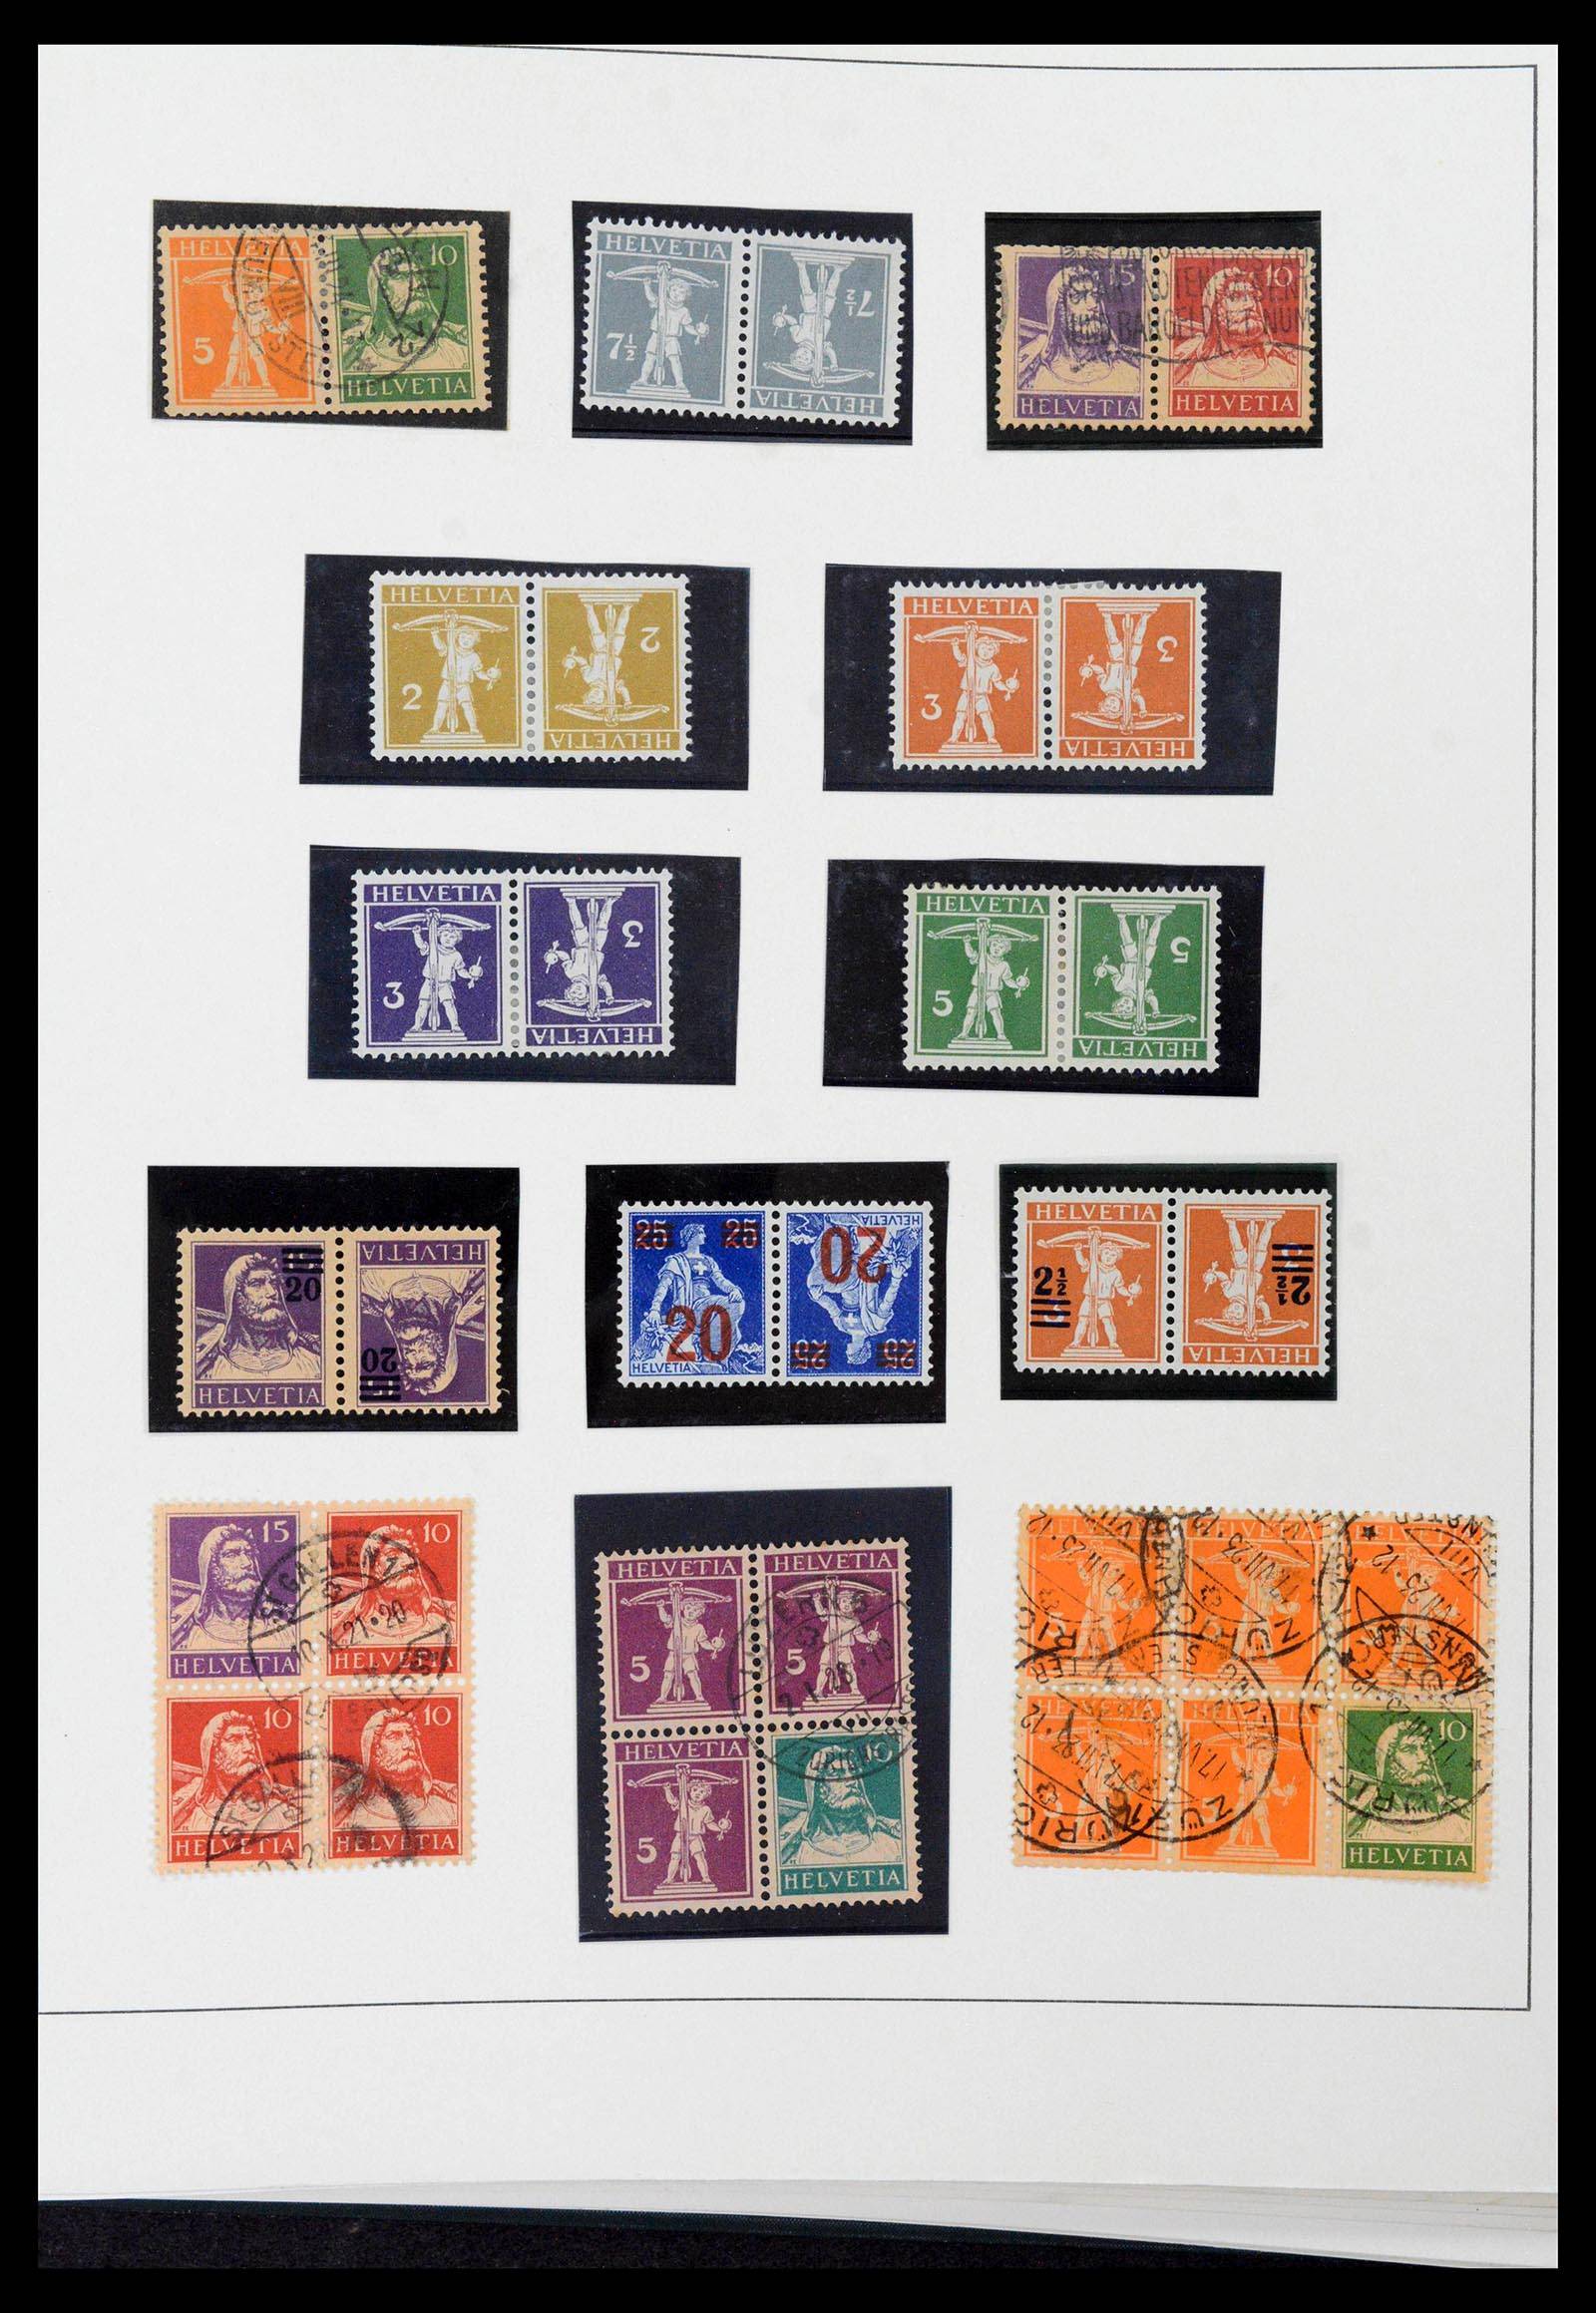 39235 0017 - Stamp collection 39235 Switzerland 1843-1960.